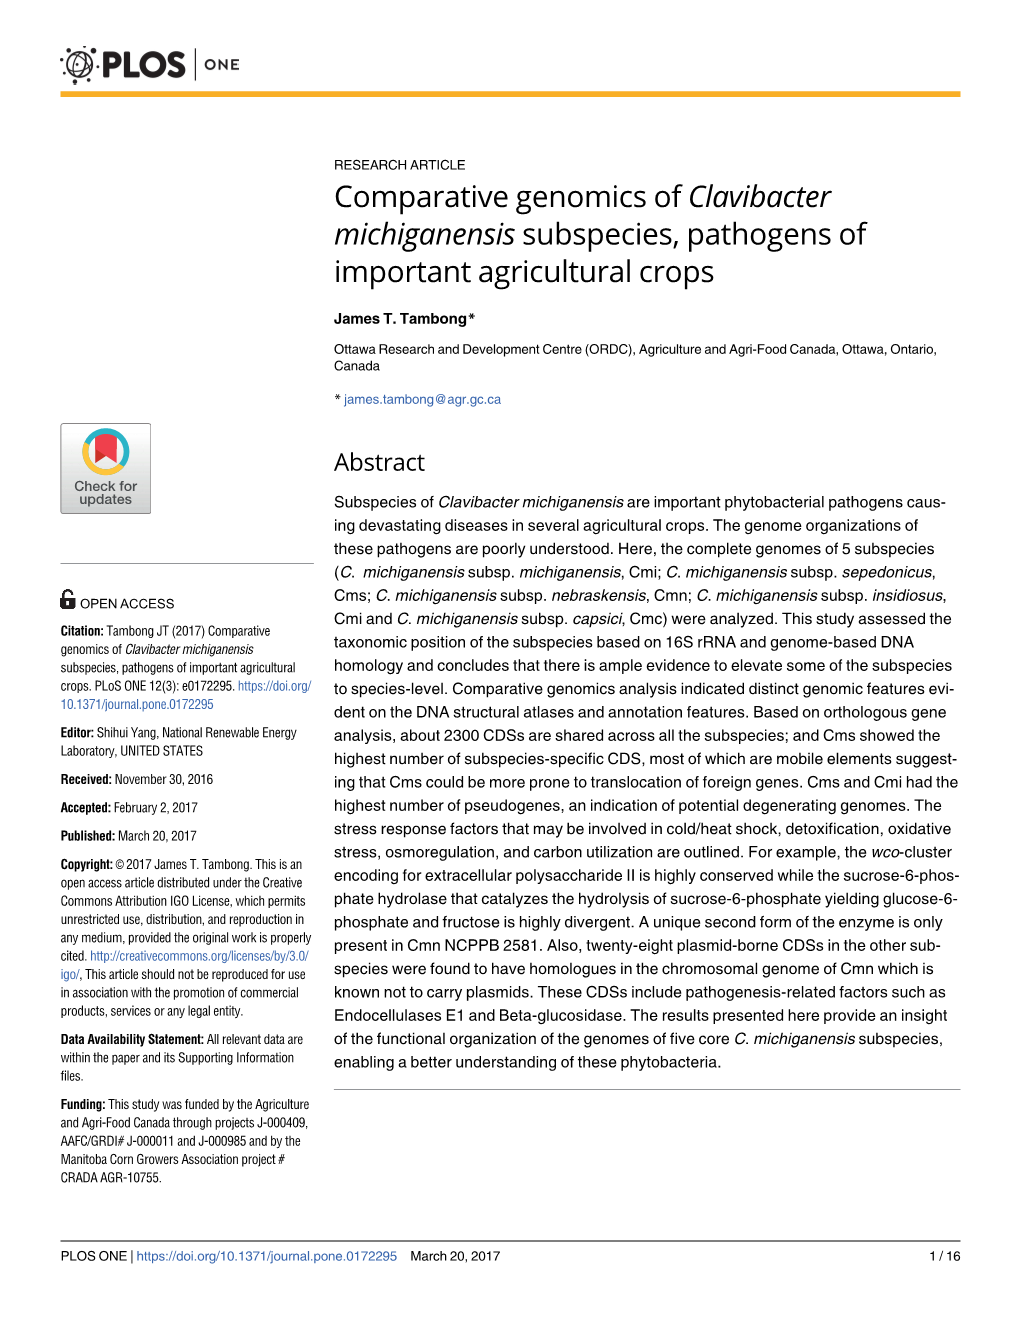 Comparative Genomics of Clavibacter Michiganensis Subspecies, Pathogens of Important Agricultural Crops